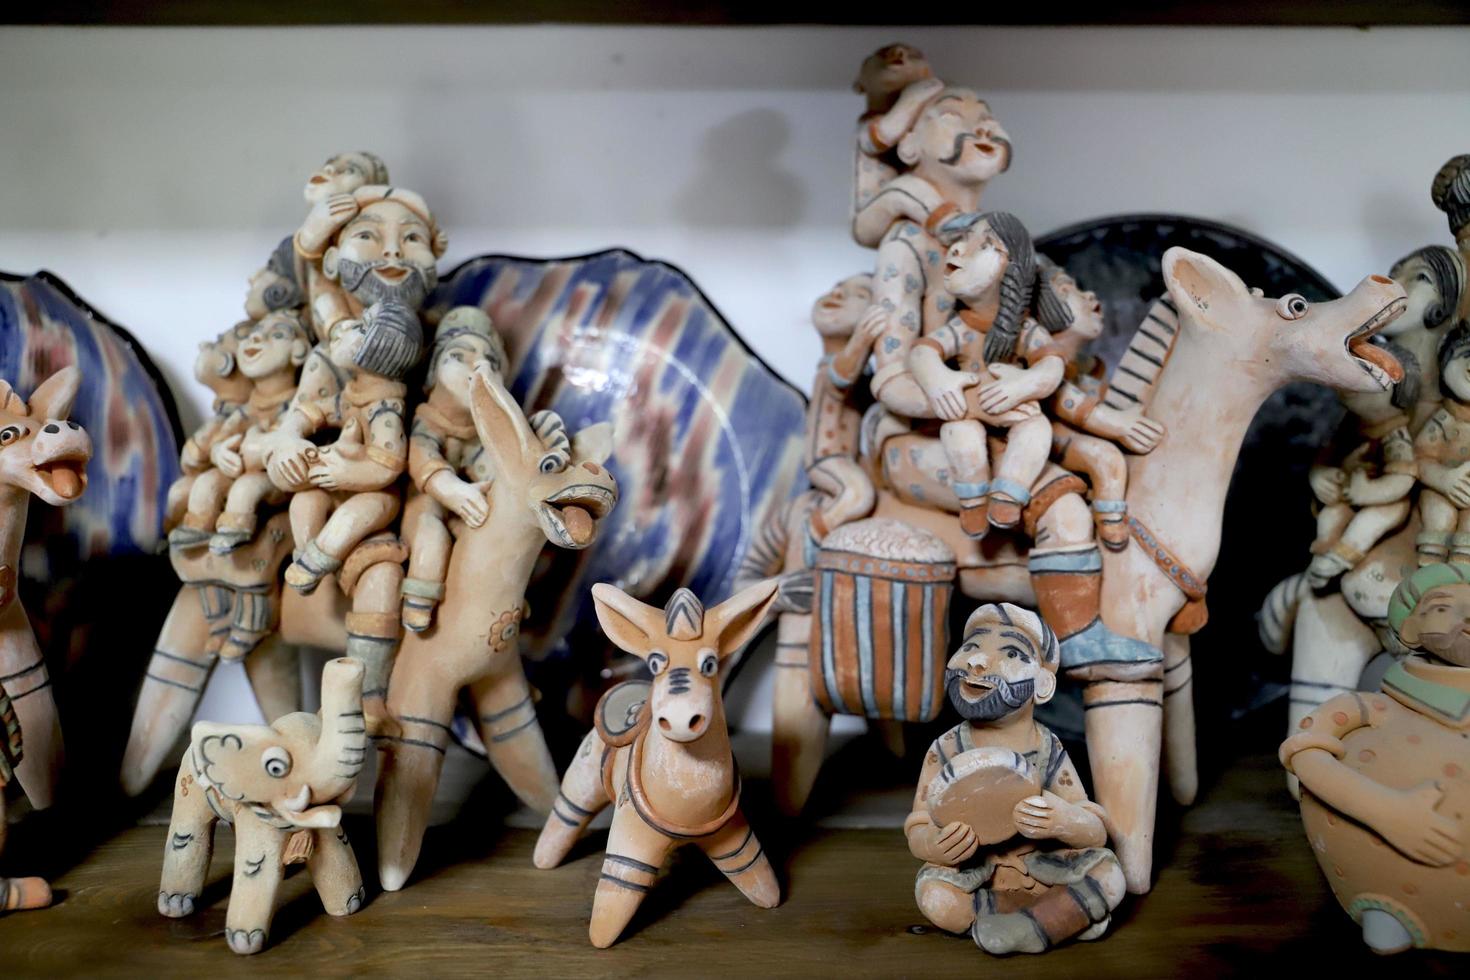 taller de alfarería. figuras de cerámica de personajes étnicos uzbekos. desenfocado. foto